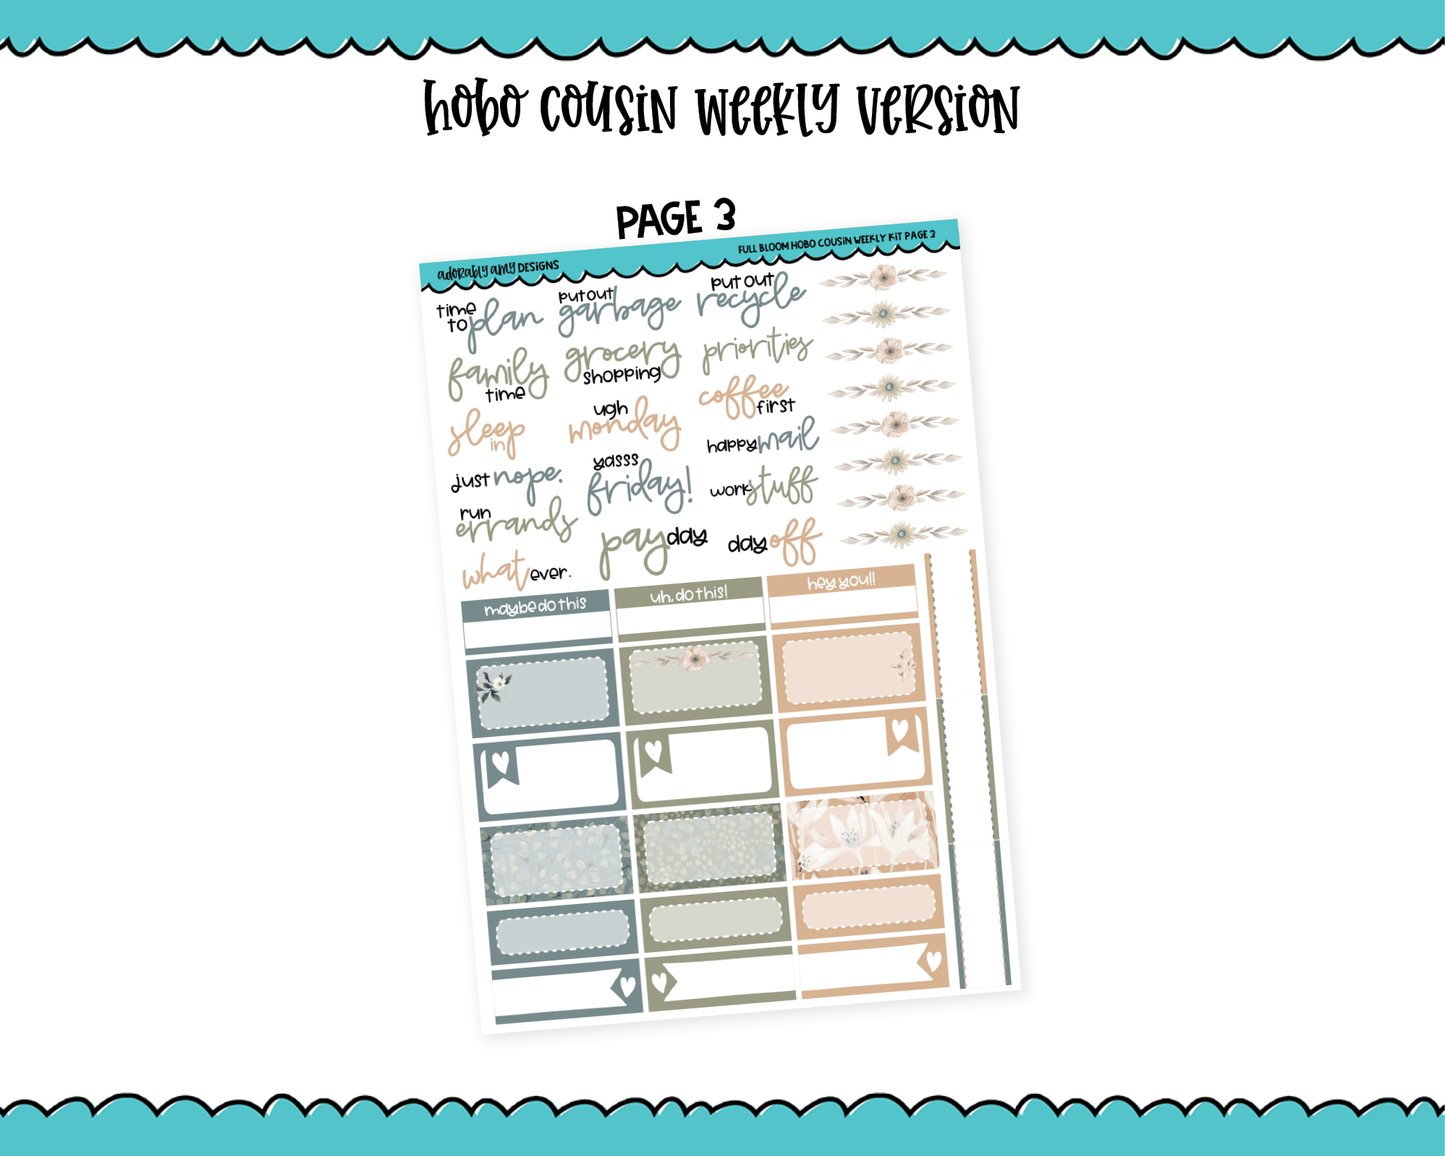 Hobonichi Cousin Weekly Full Bloom Planner Sticker Kit for Hobo Cousin or Similar Planners